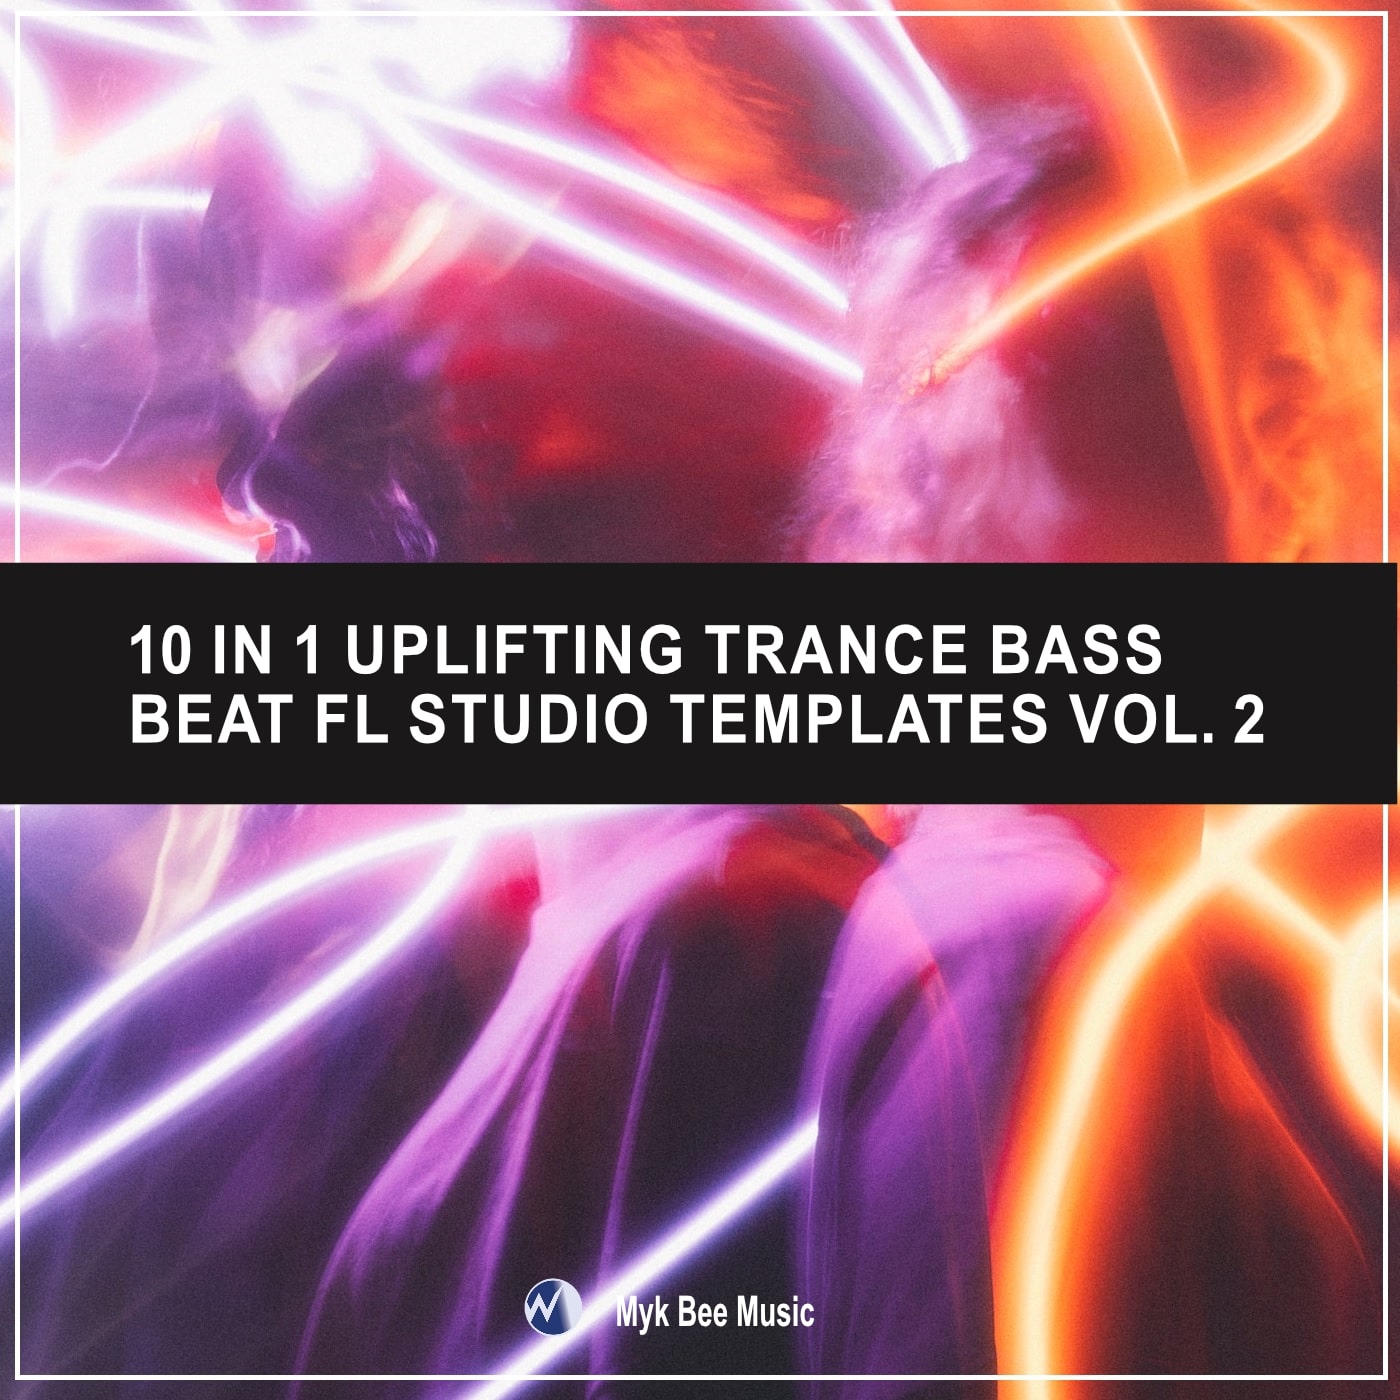 10 in 1 Uplifting Trance Bass Beat FL Studio Templates Vol. 2